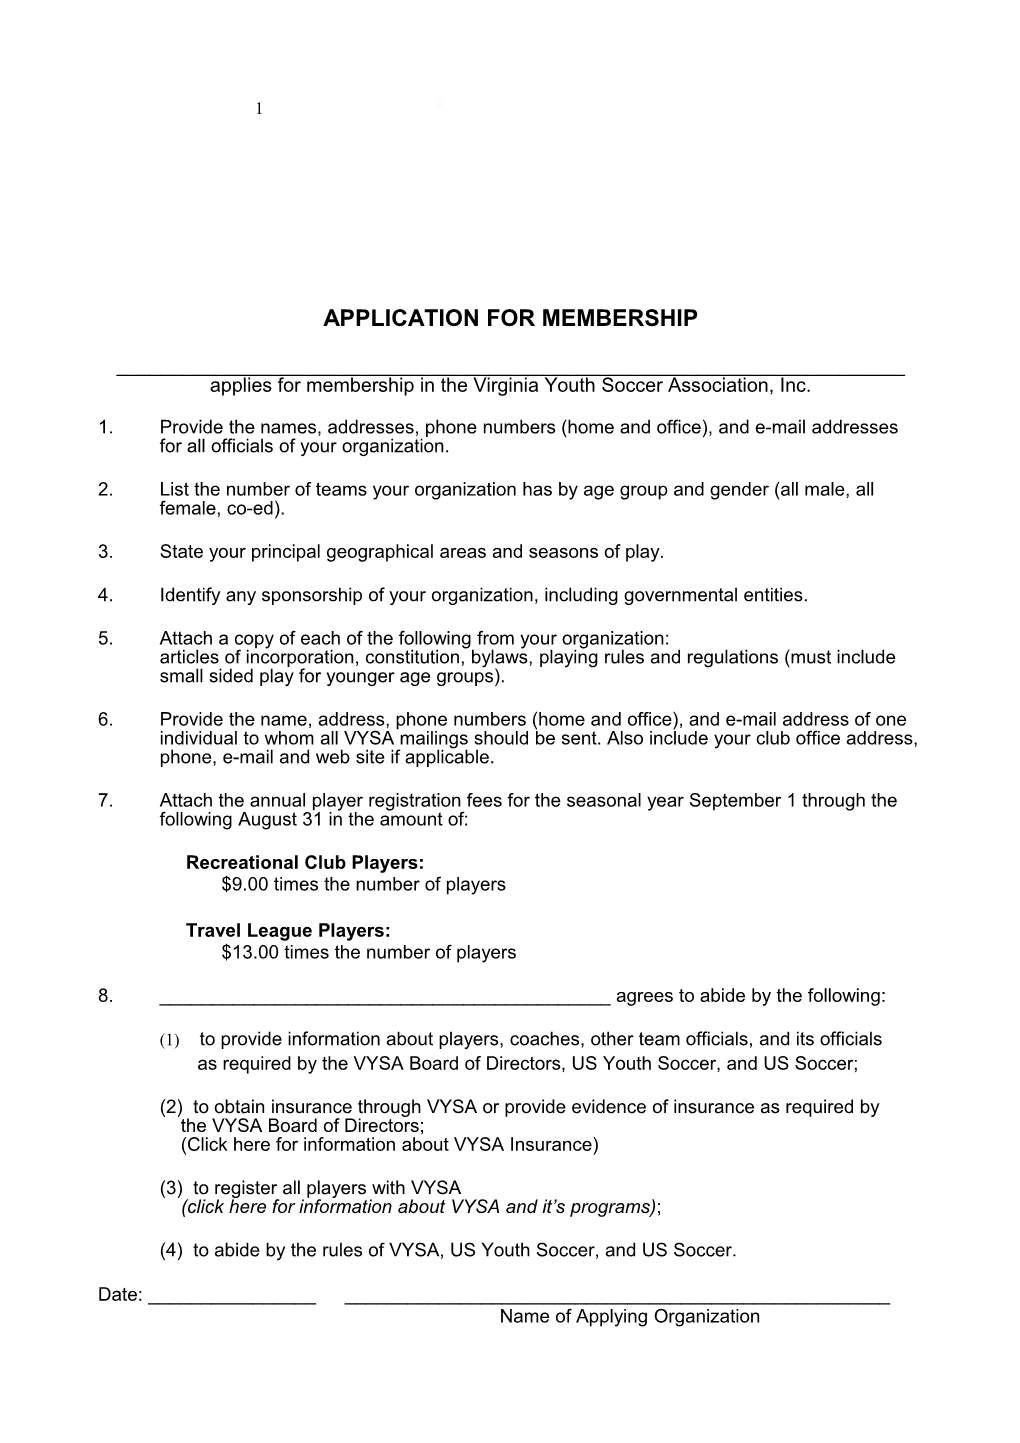 Application for Membership s12